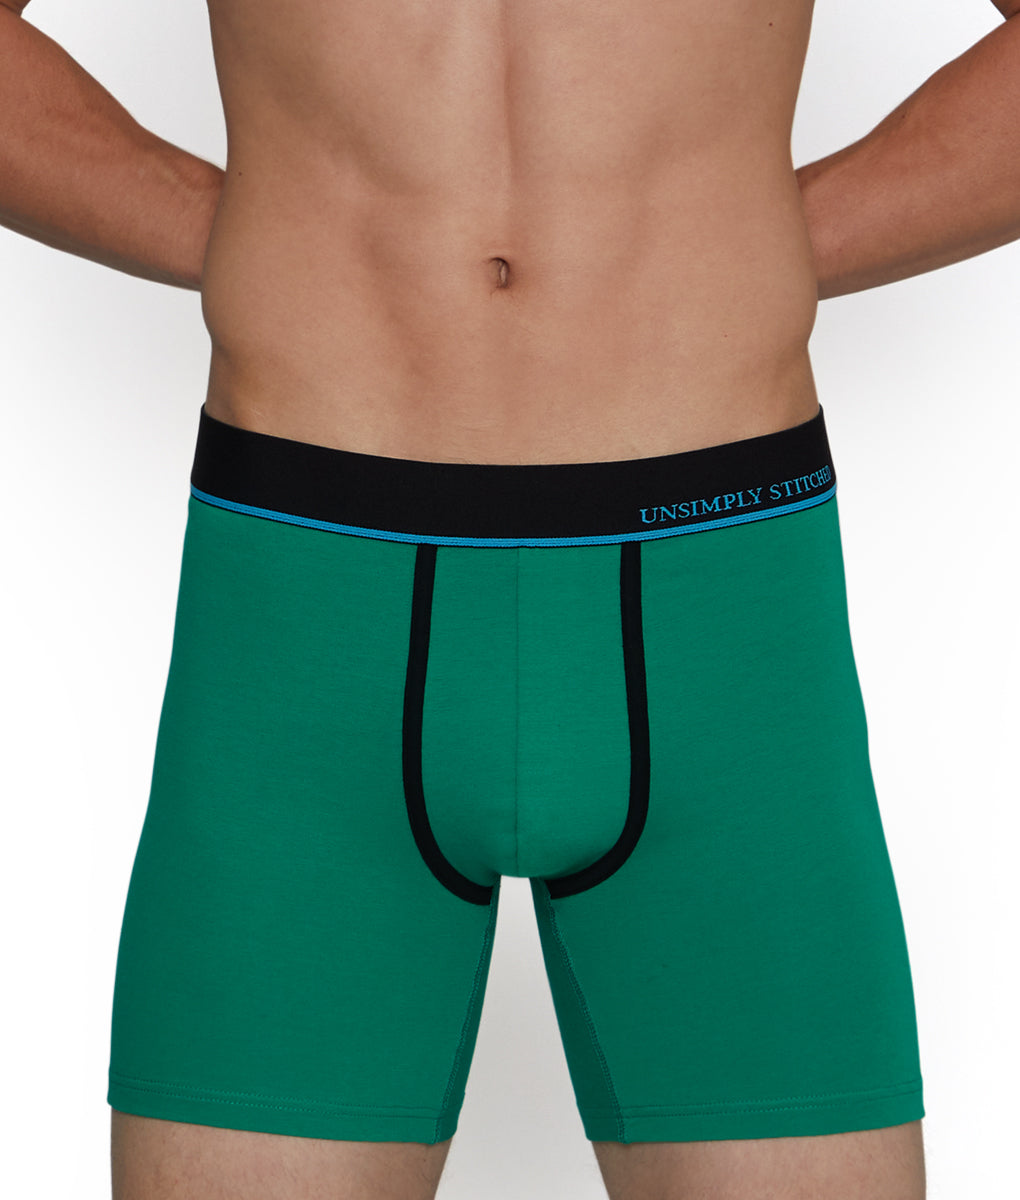 Unsimply Stitched Solid Boxer Brief - Underwear Expert